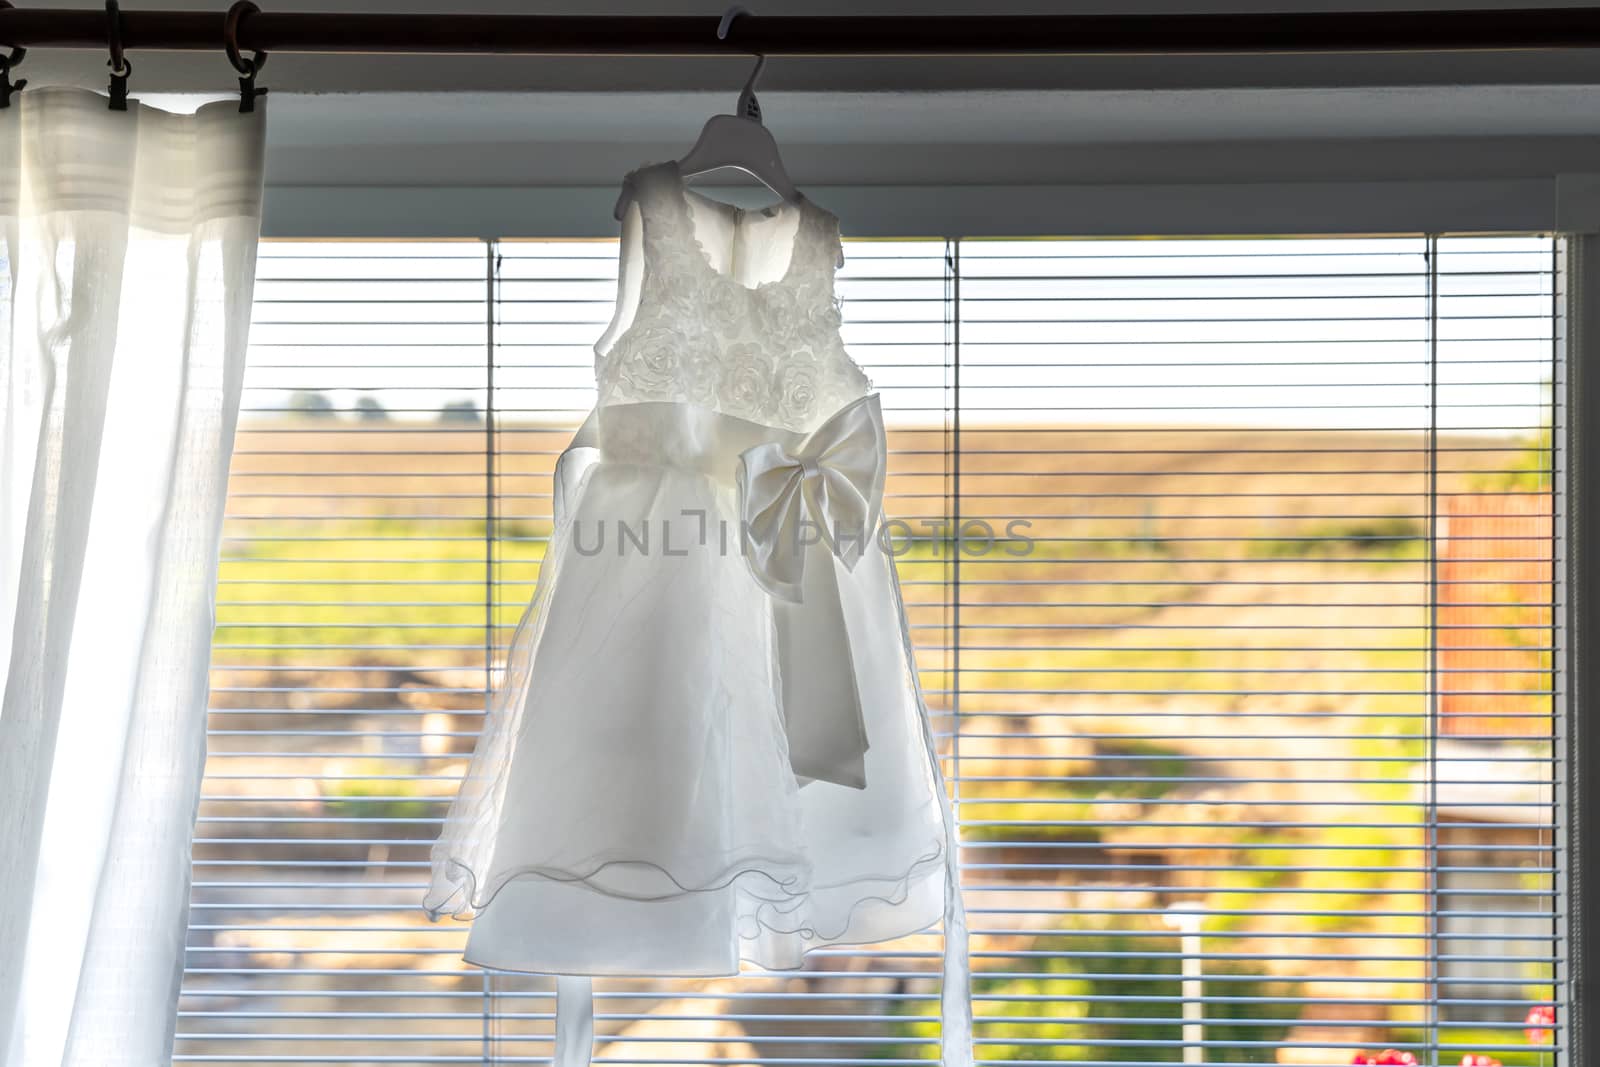 children wedding dress hanging on window cornices by Edophoto